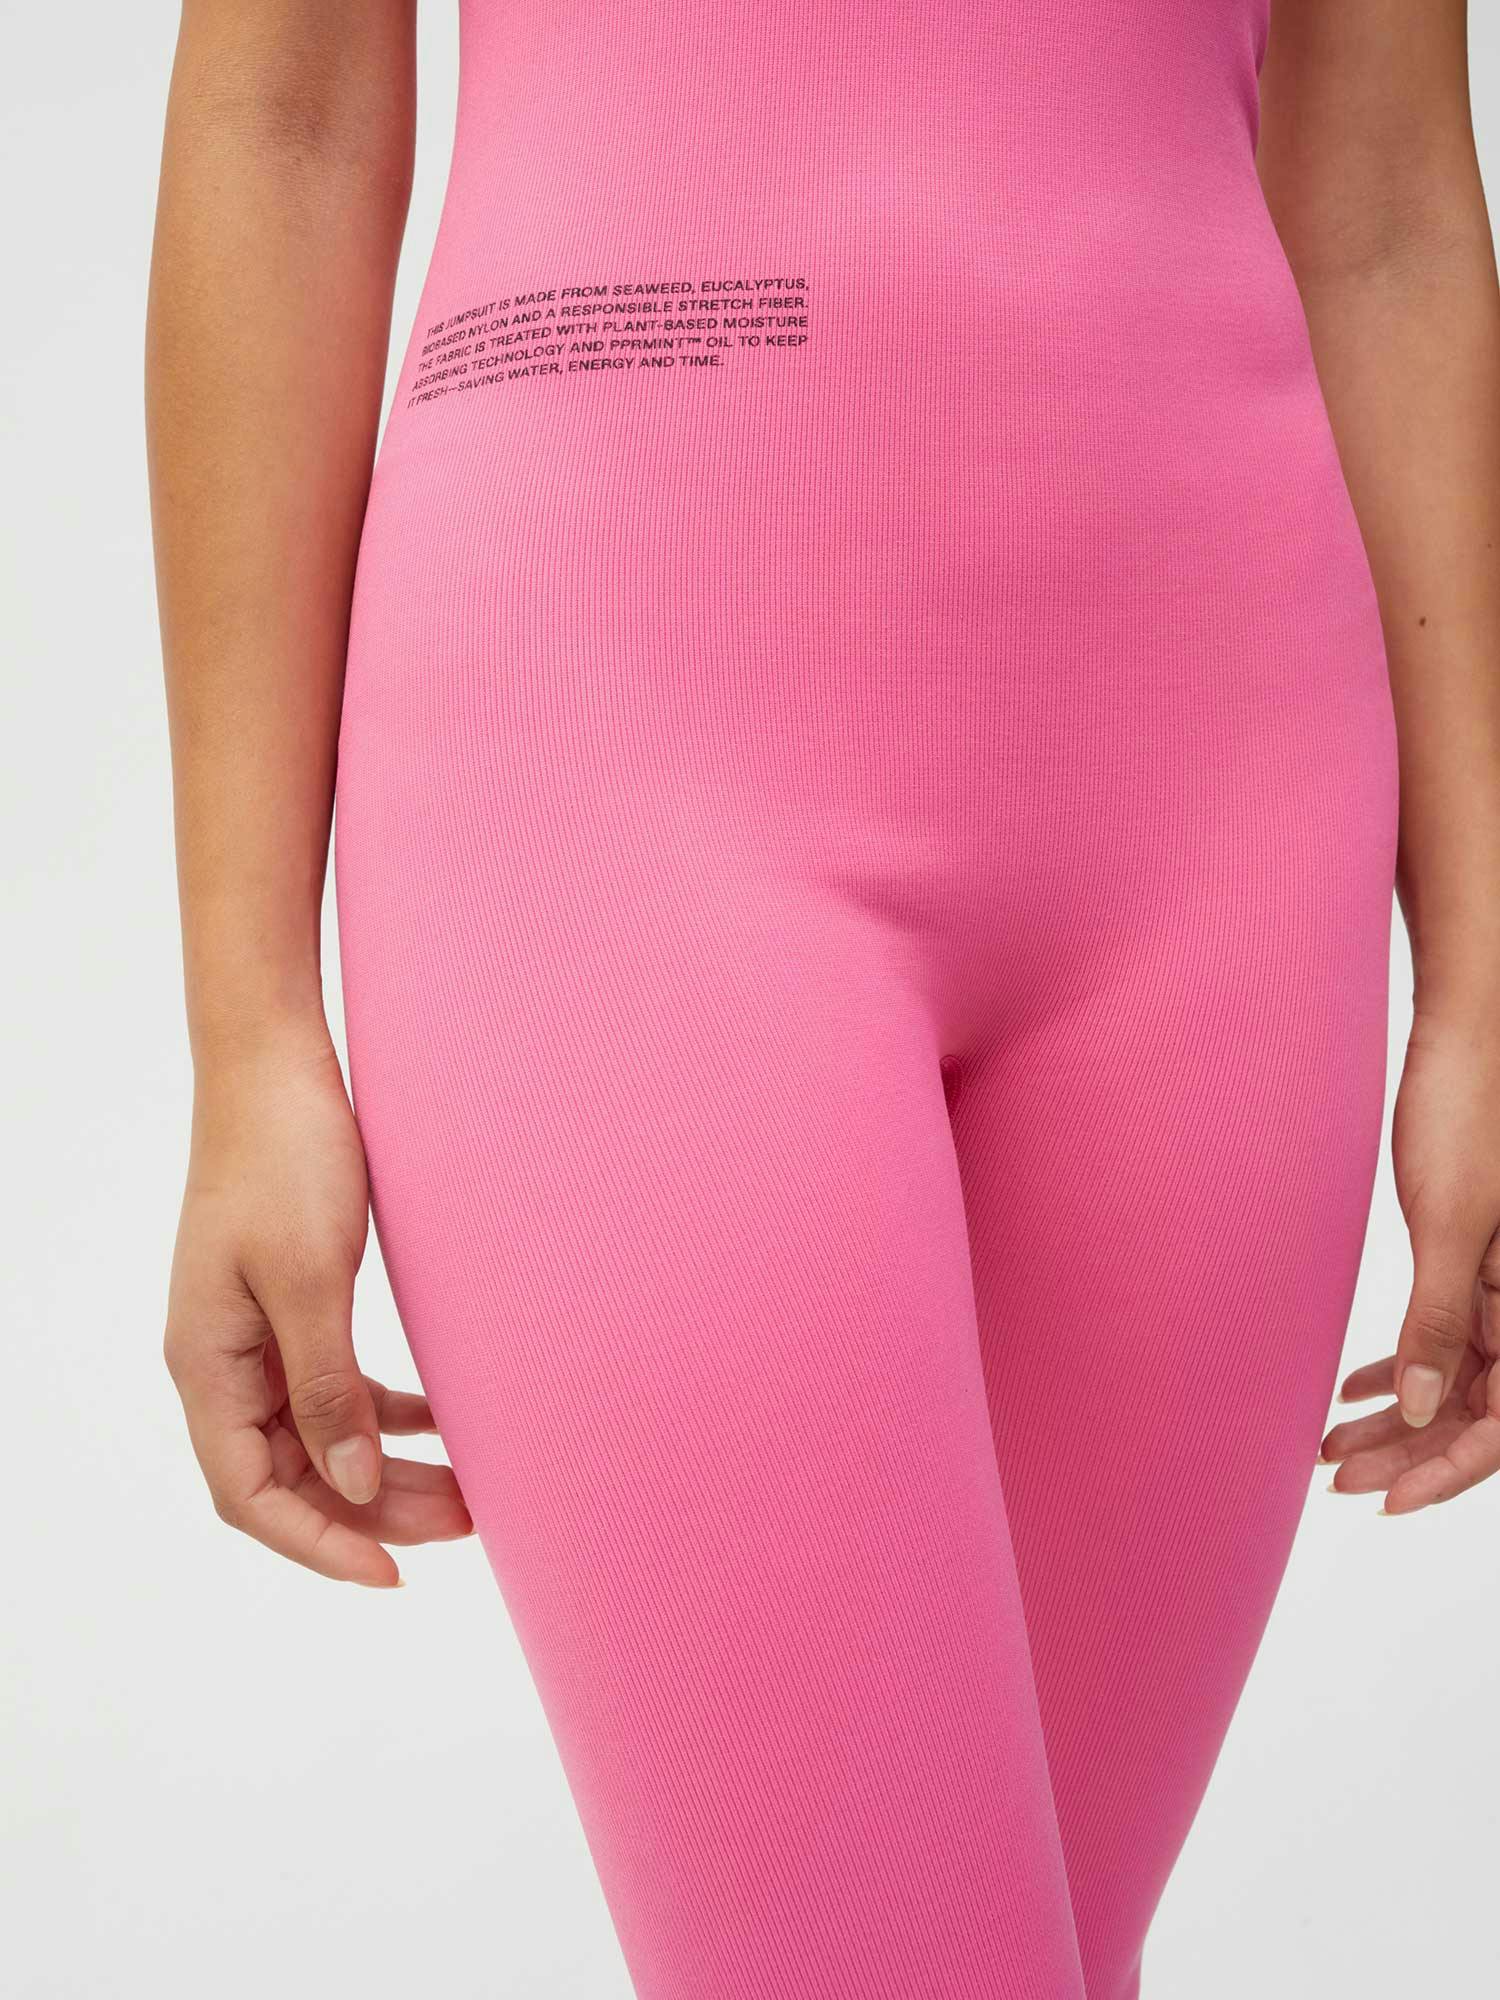 https://cdn.shopify.com/s/files/1/0035/1309/0115/products/Activewear-Womens-Jumpsuit-Flamingo-Pink-3_e5896447-7c58-4645-a3d5-6737e95199dd.jpg?v=1662475882